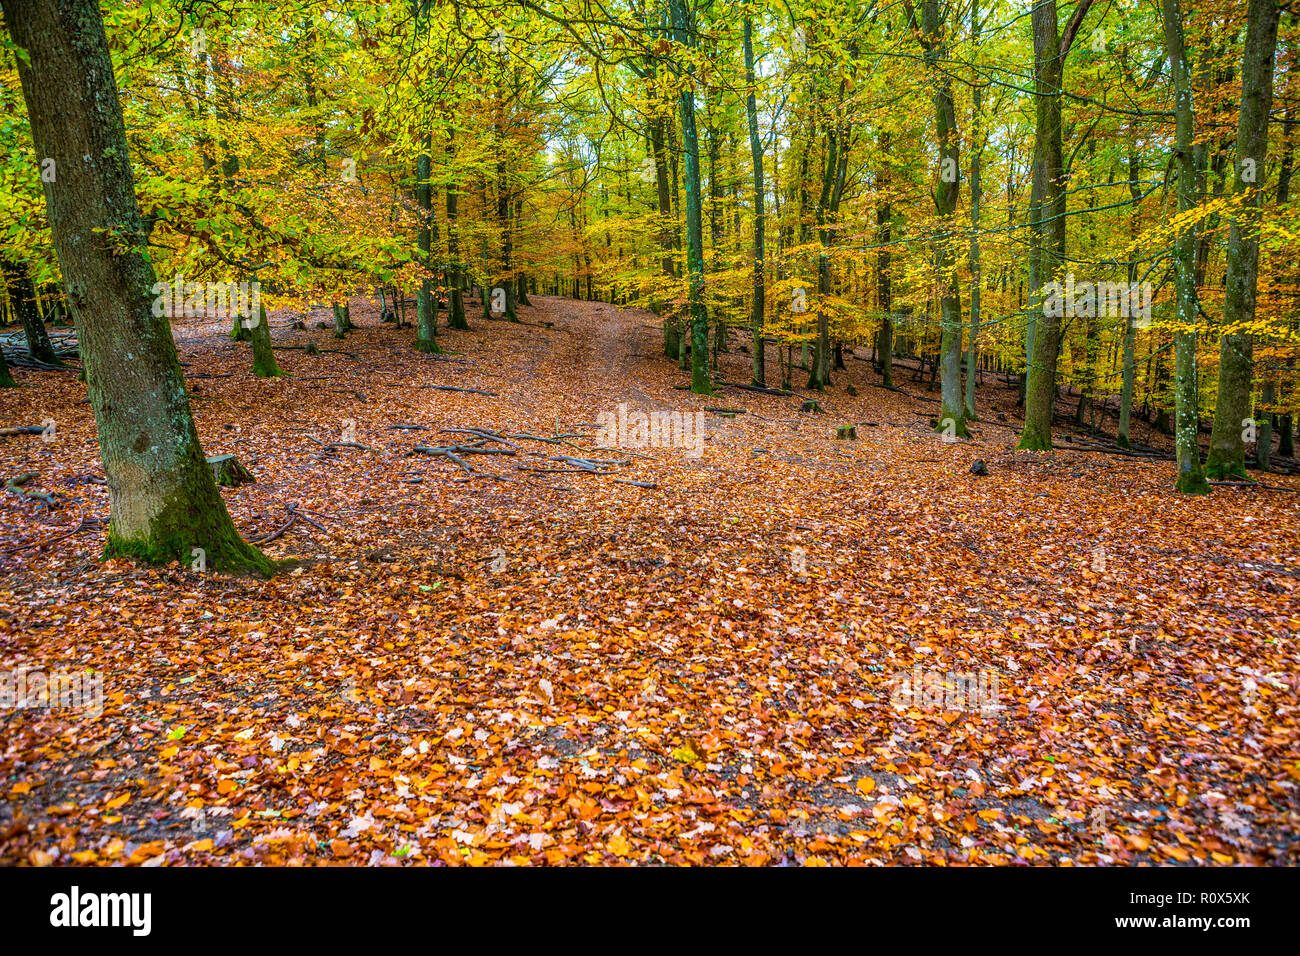 Autumn forest scene at Wildlife and Adventure Park Daun, Germany Stock Photo